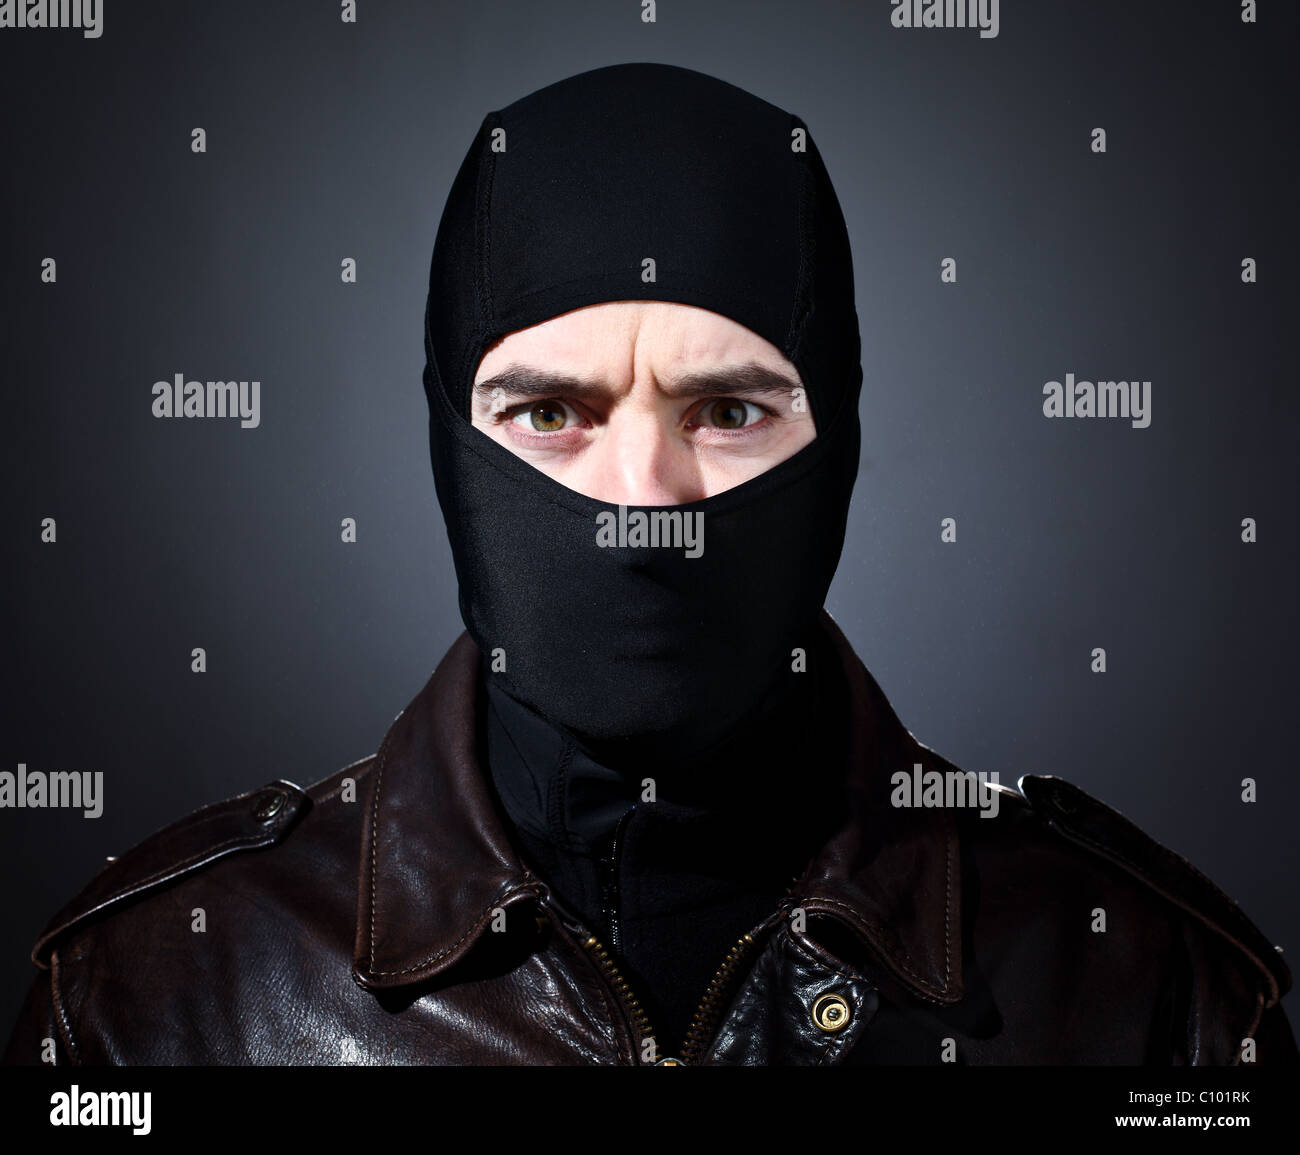 closeup portrait of caucasian criminal with balaclava Stock Photo